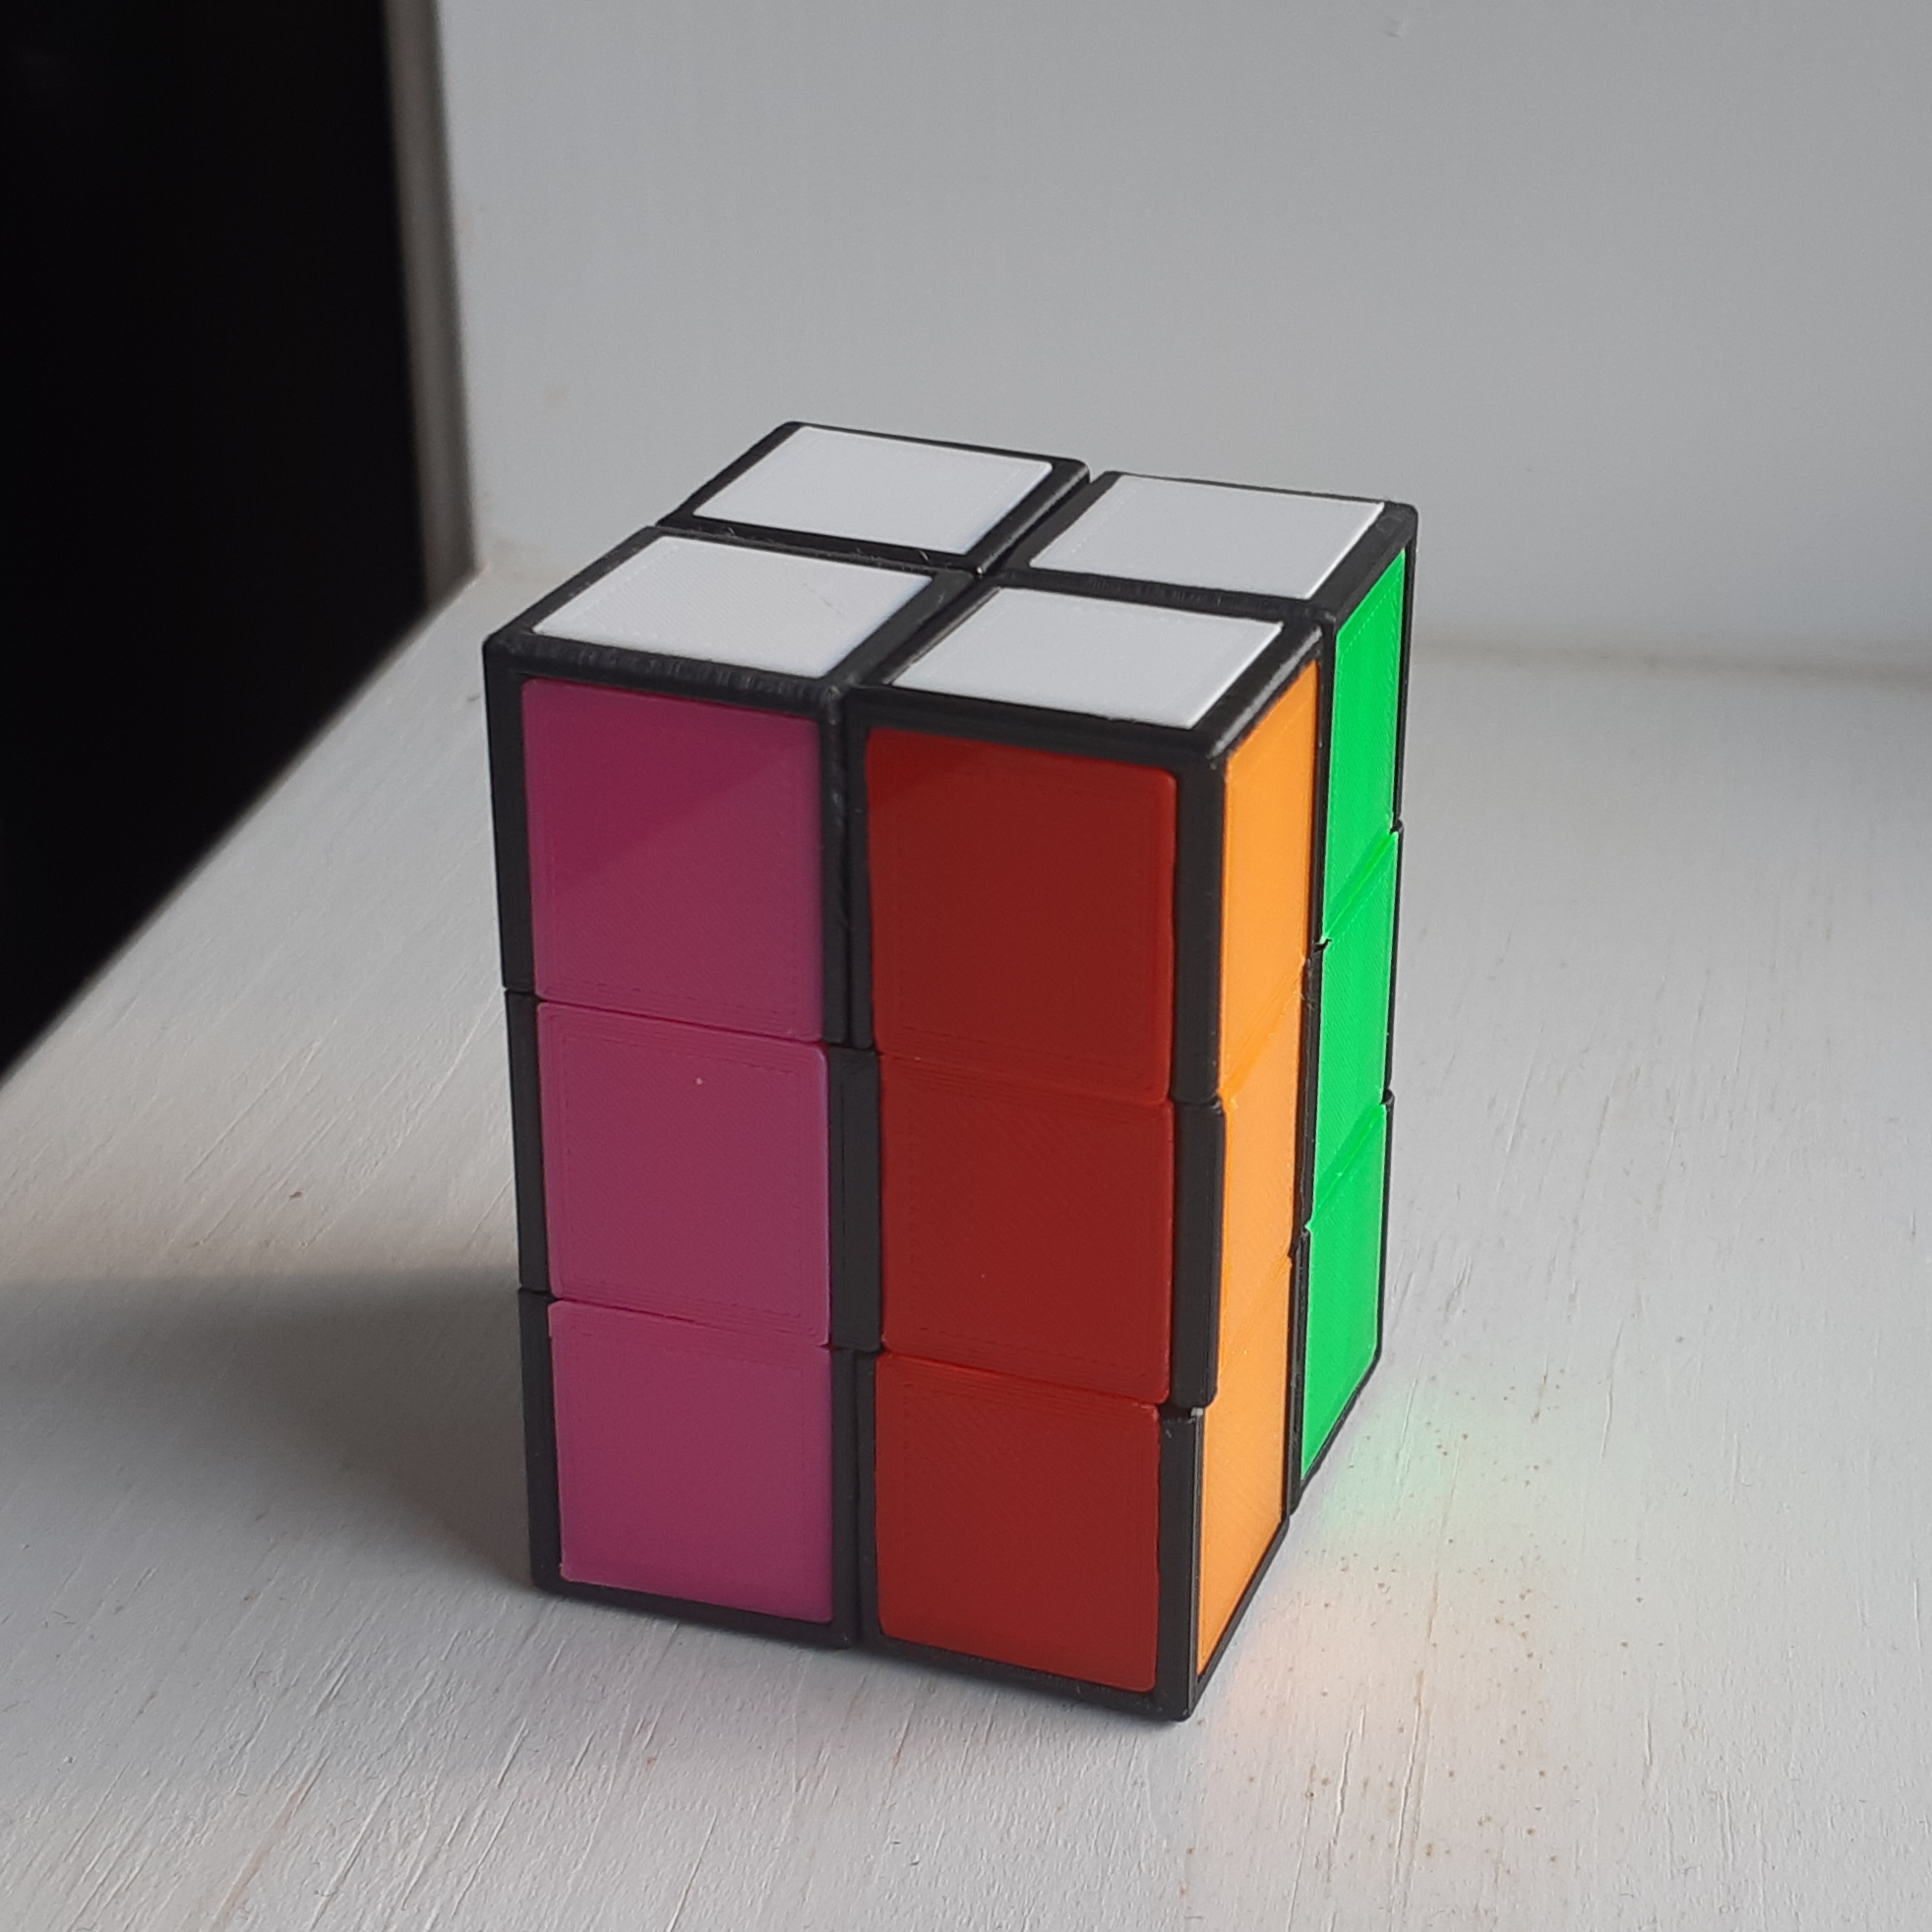 2x2x3 sliding tile puzzle (screwless)